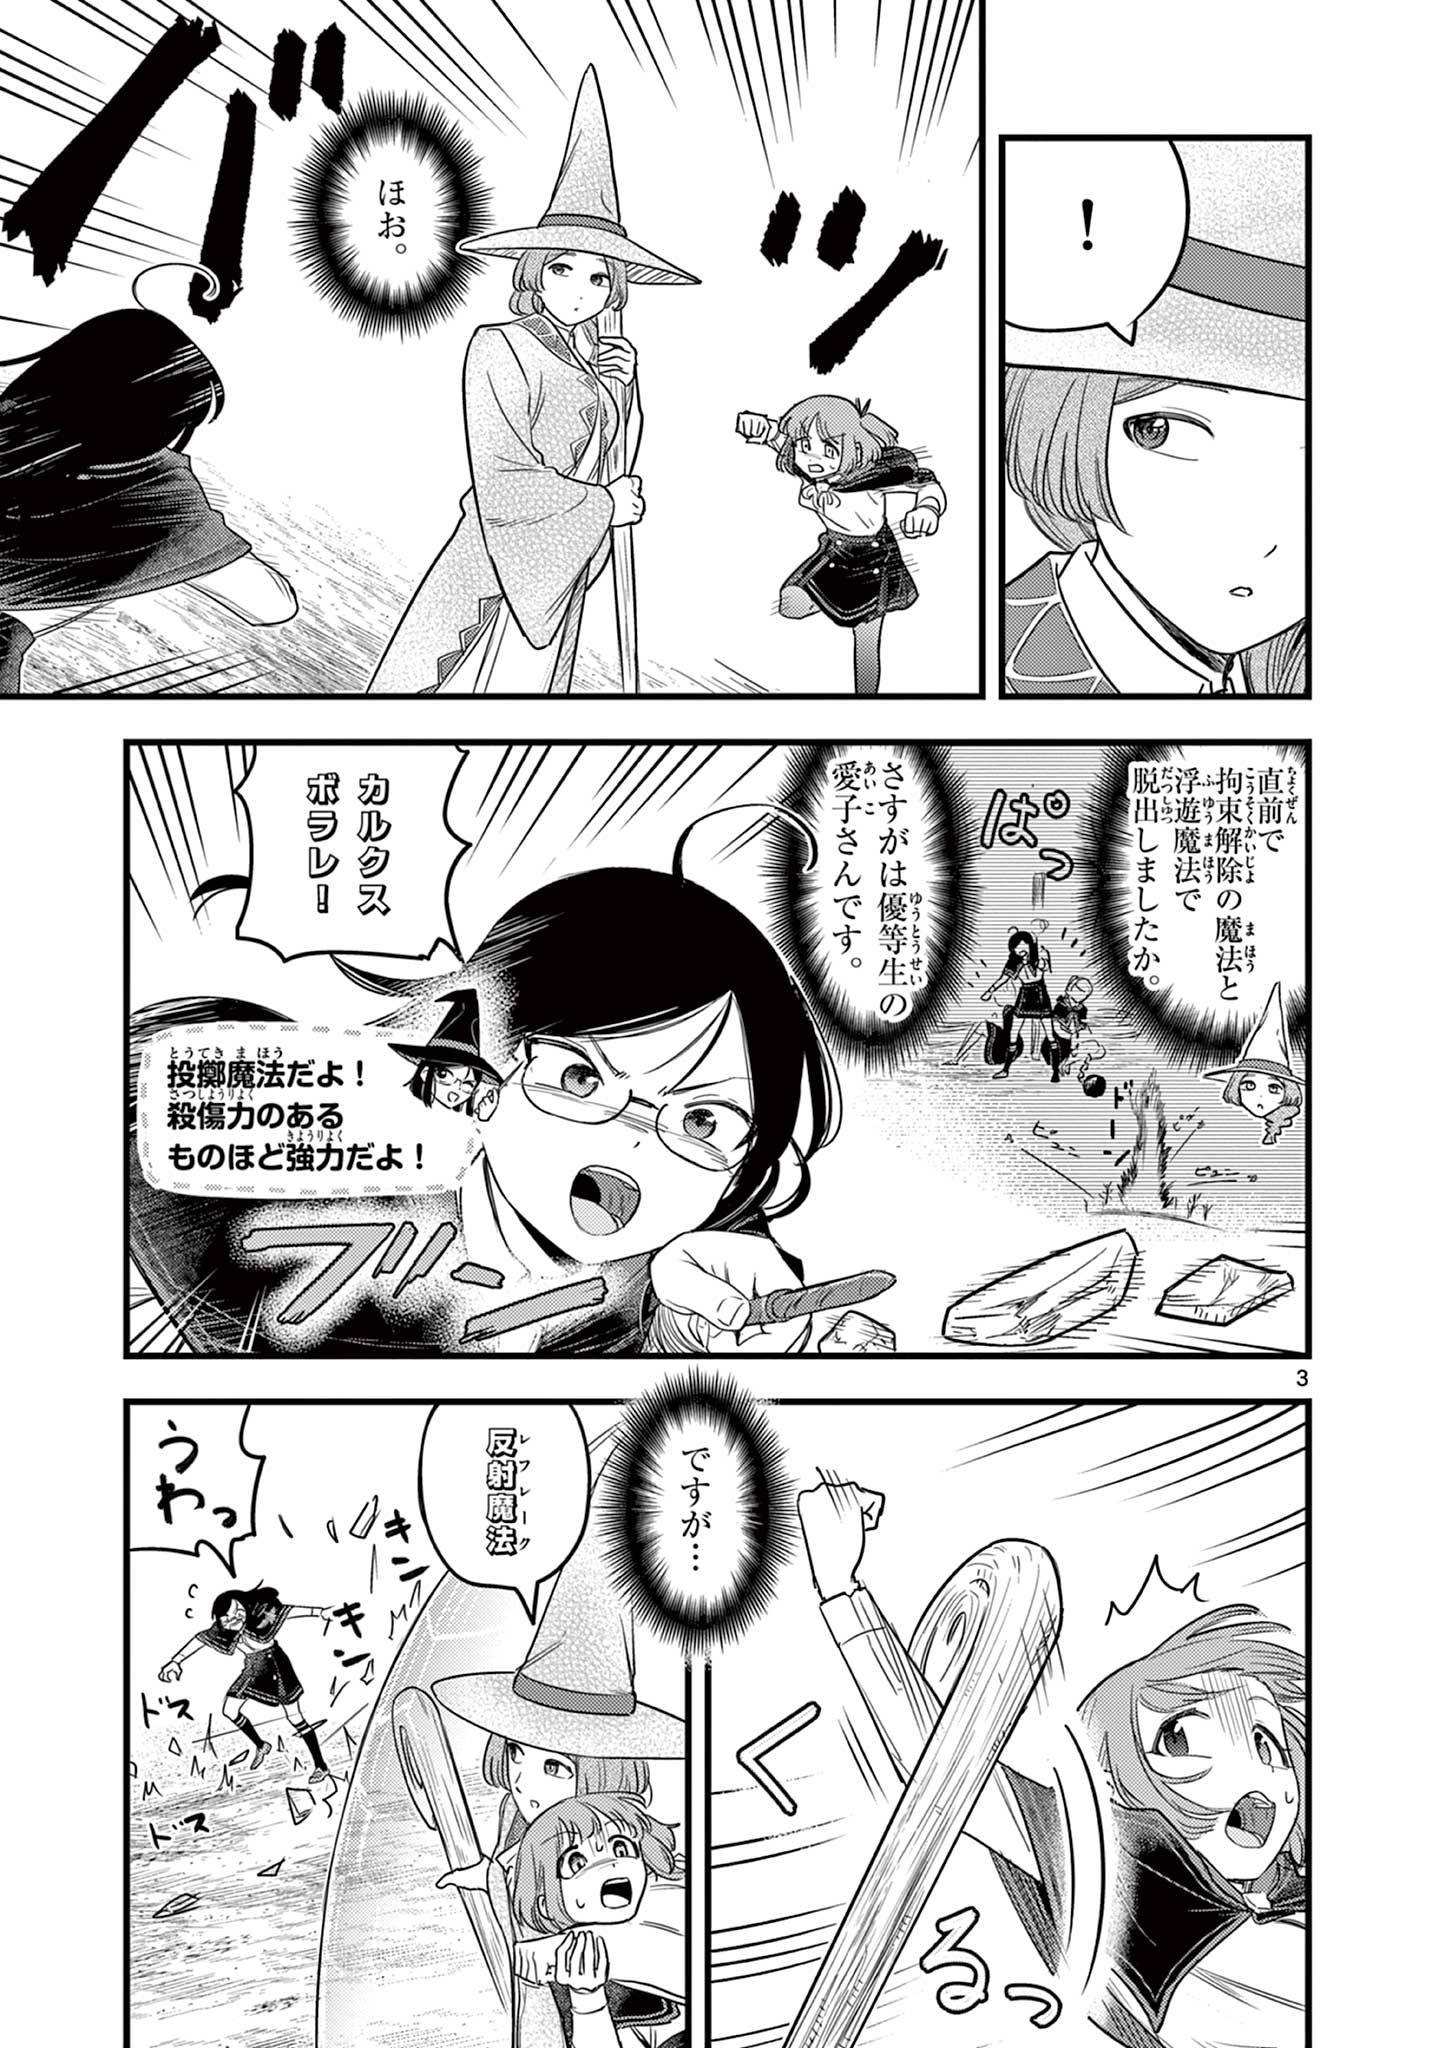 Kuro Mahou Ryou no Sanakunin - Chapter 8 - Page 3